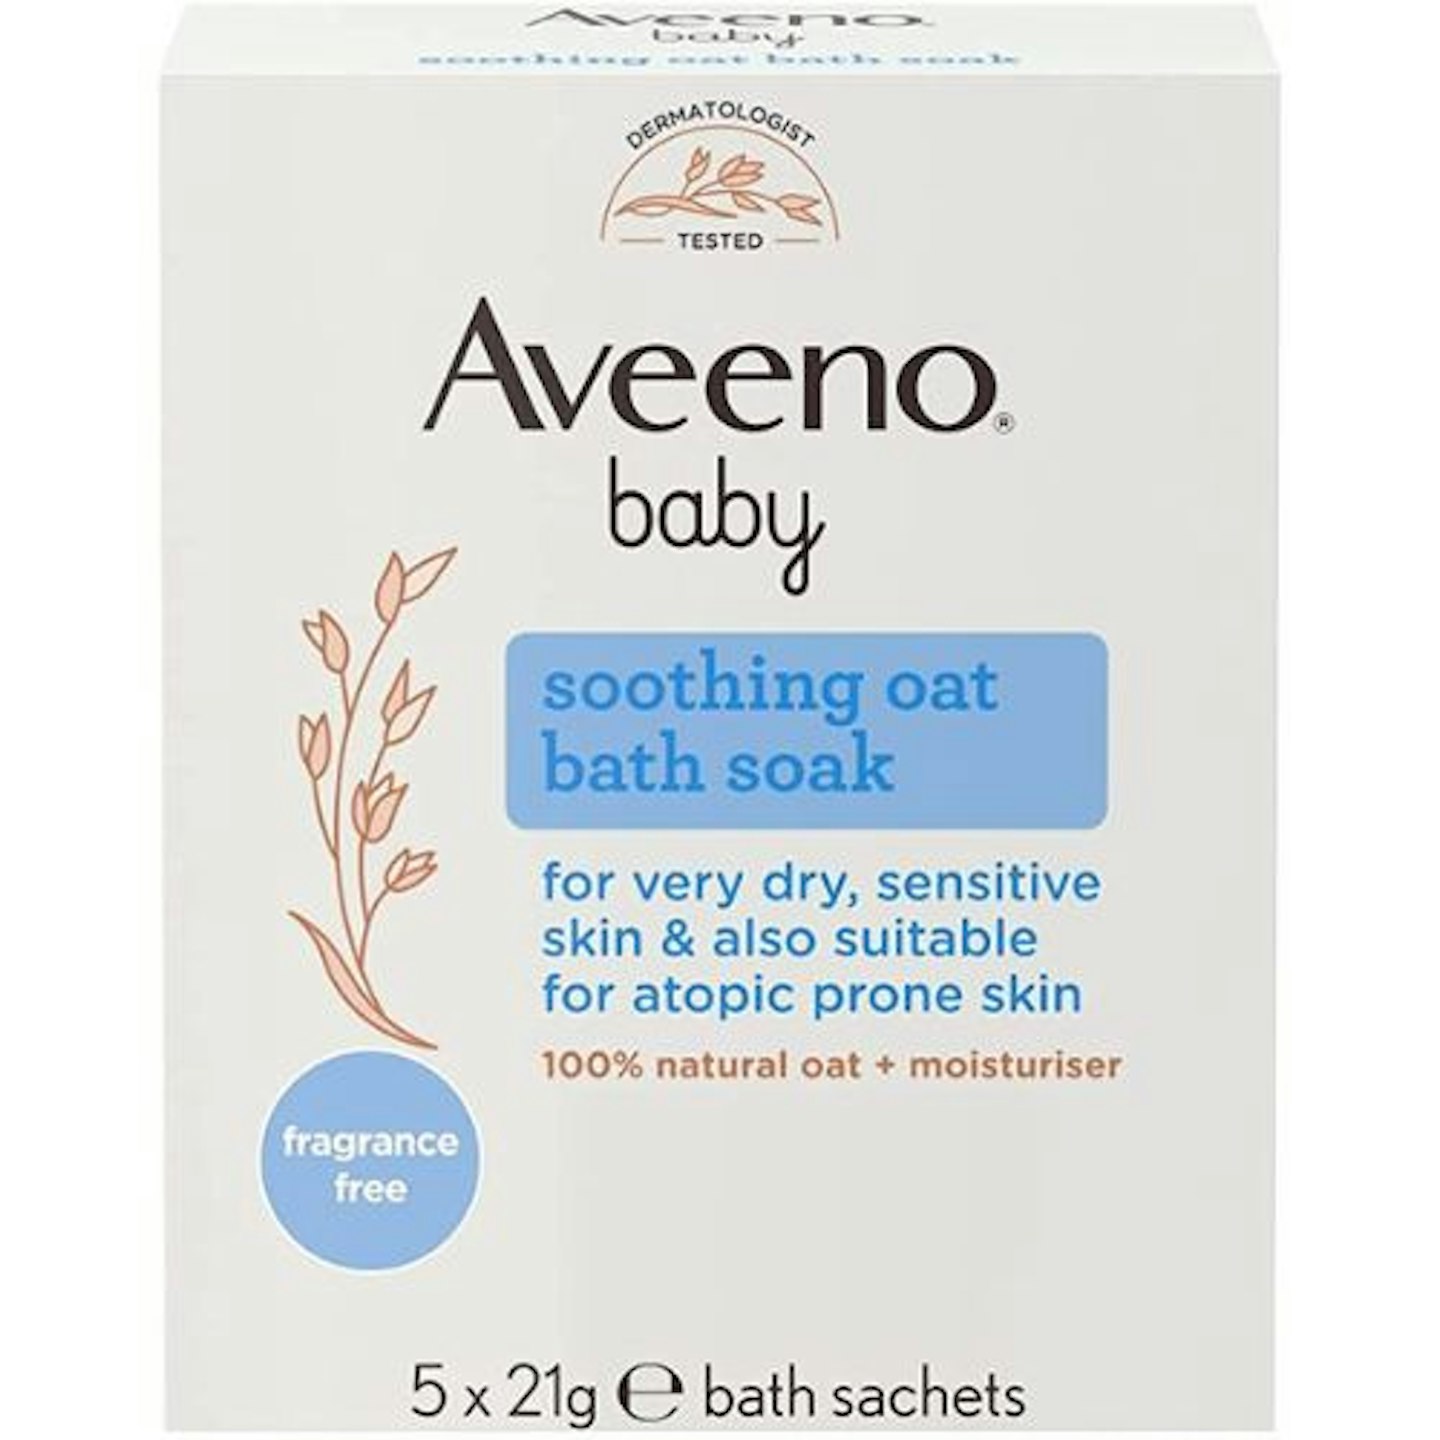 AVEENO Baby, Soothing Oat Bath Soak, 5 x 21g Bath sachets